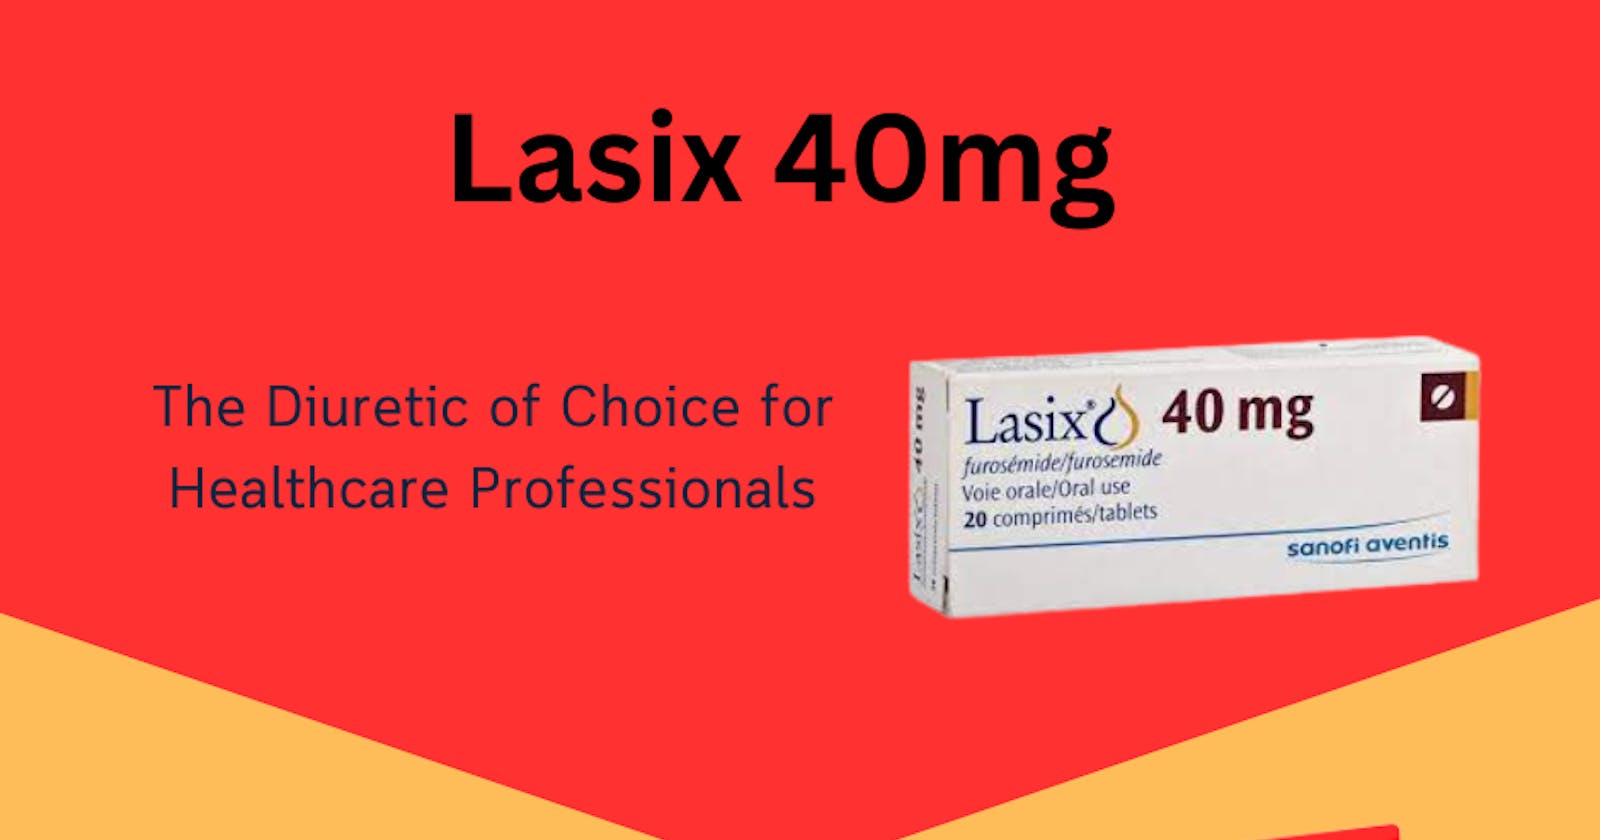 Lasix 40mg - Effective Treatment for Congestive Heart Failure